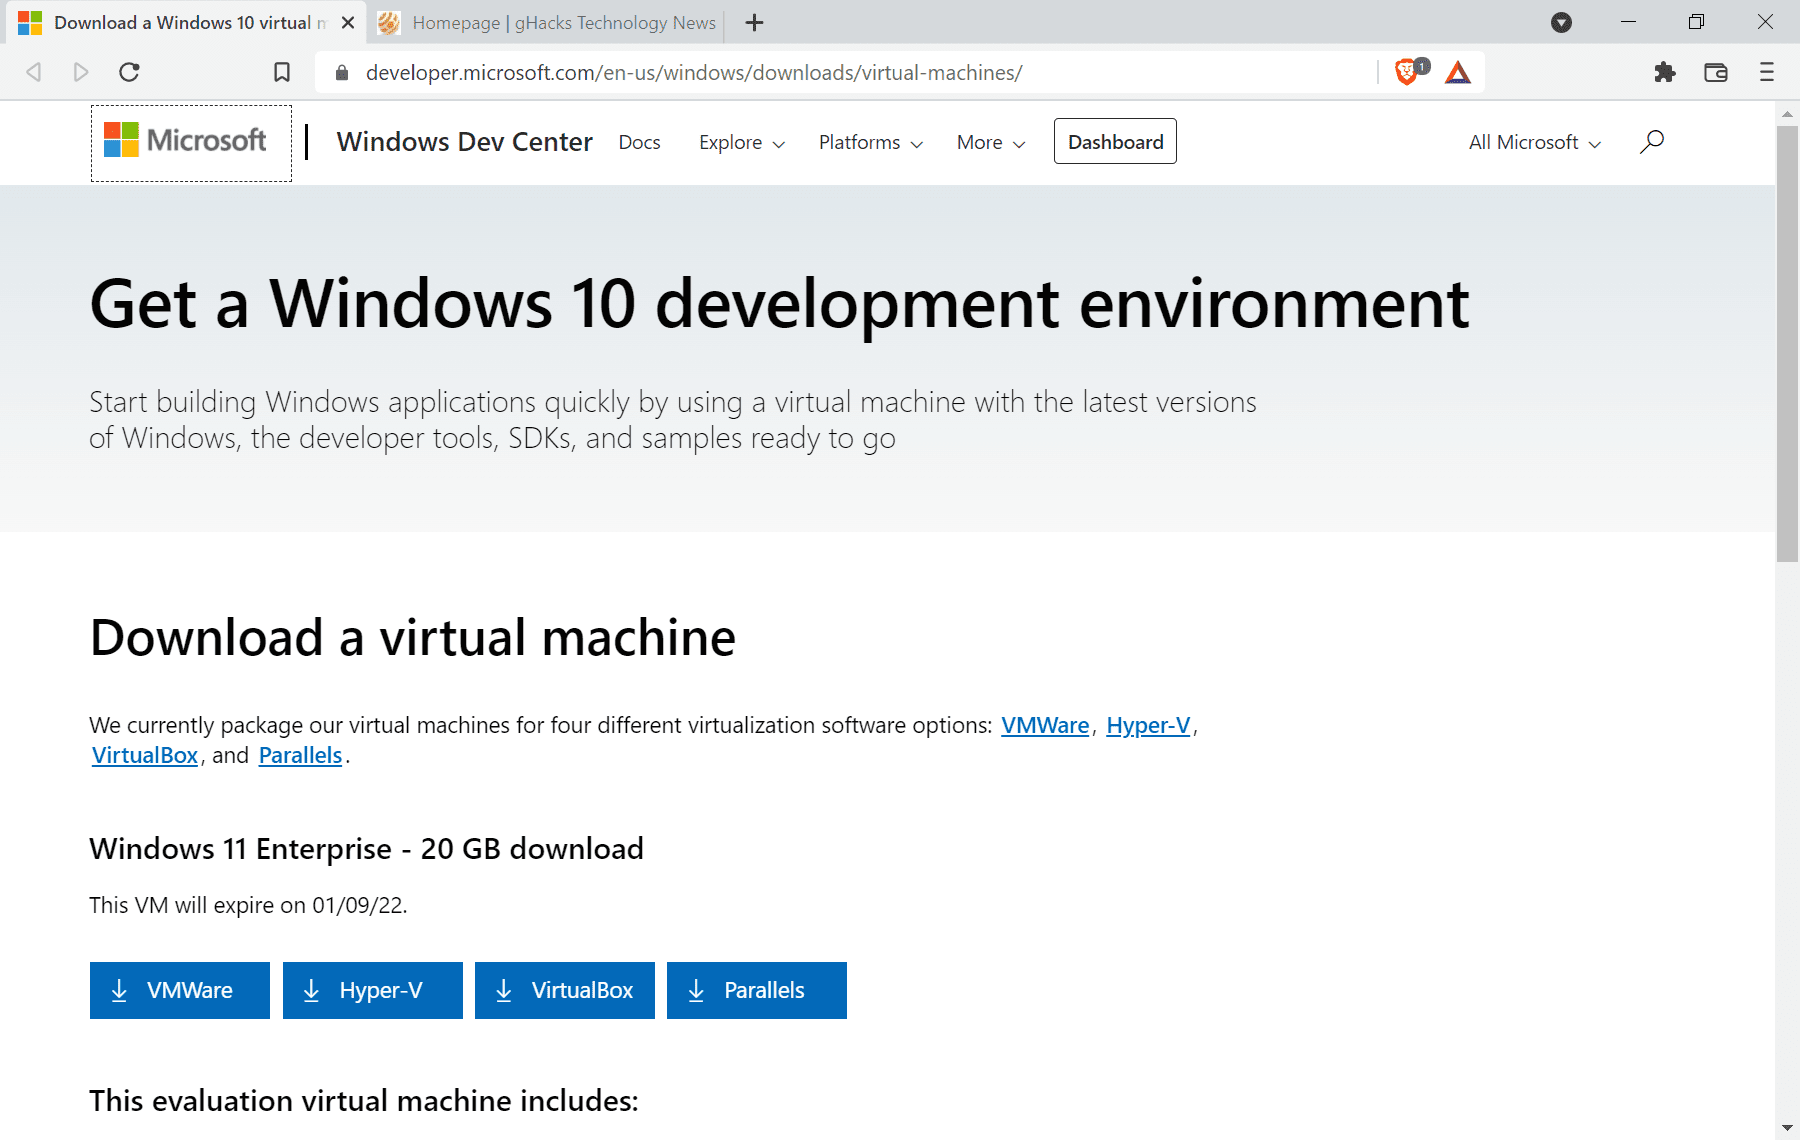 Windows 11 Enterprise Virtual Machine images downloads